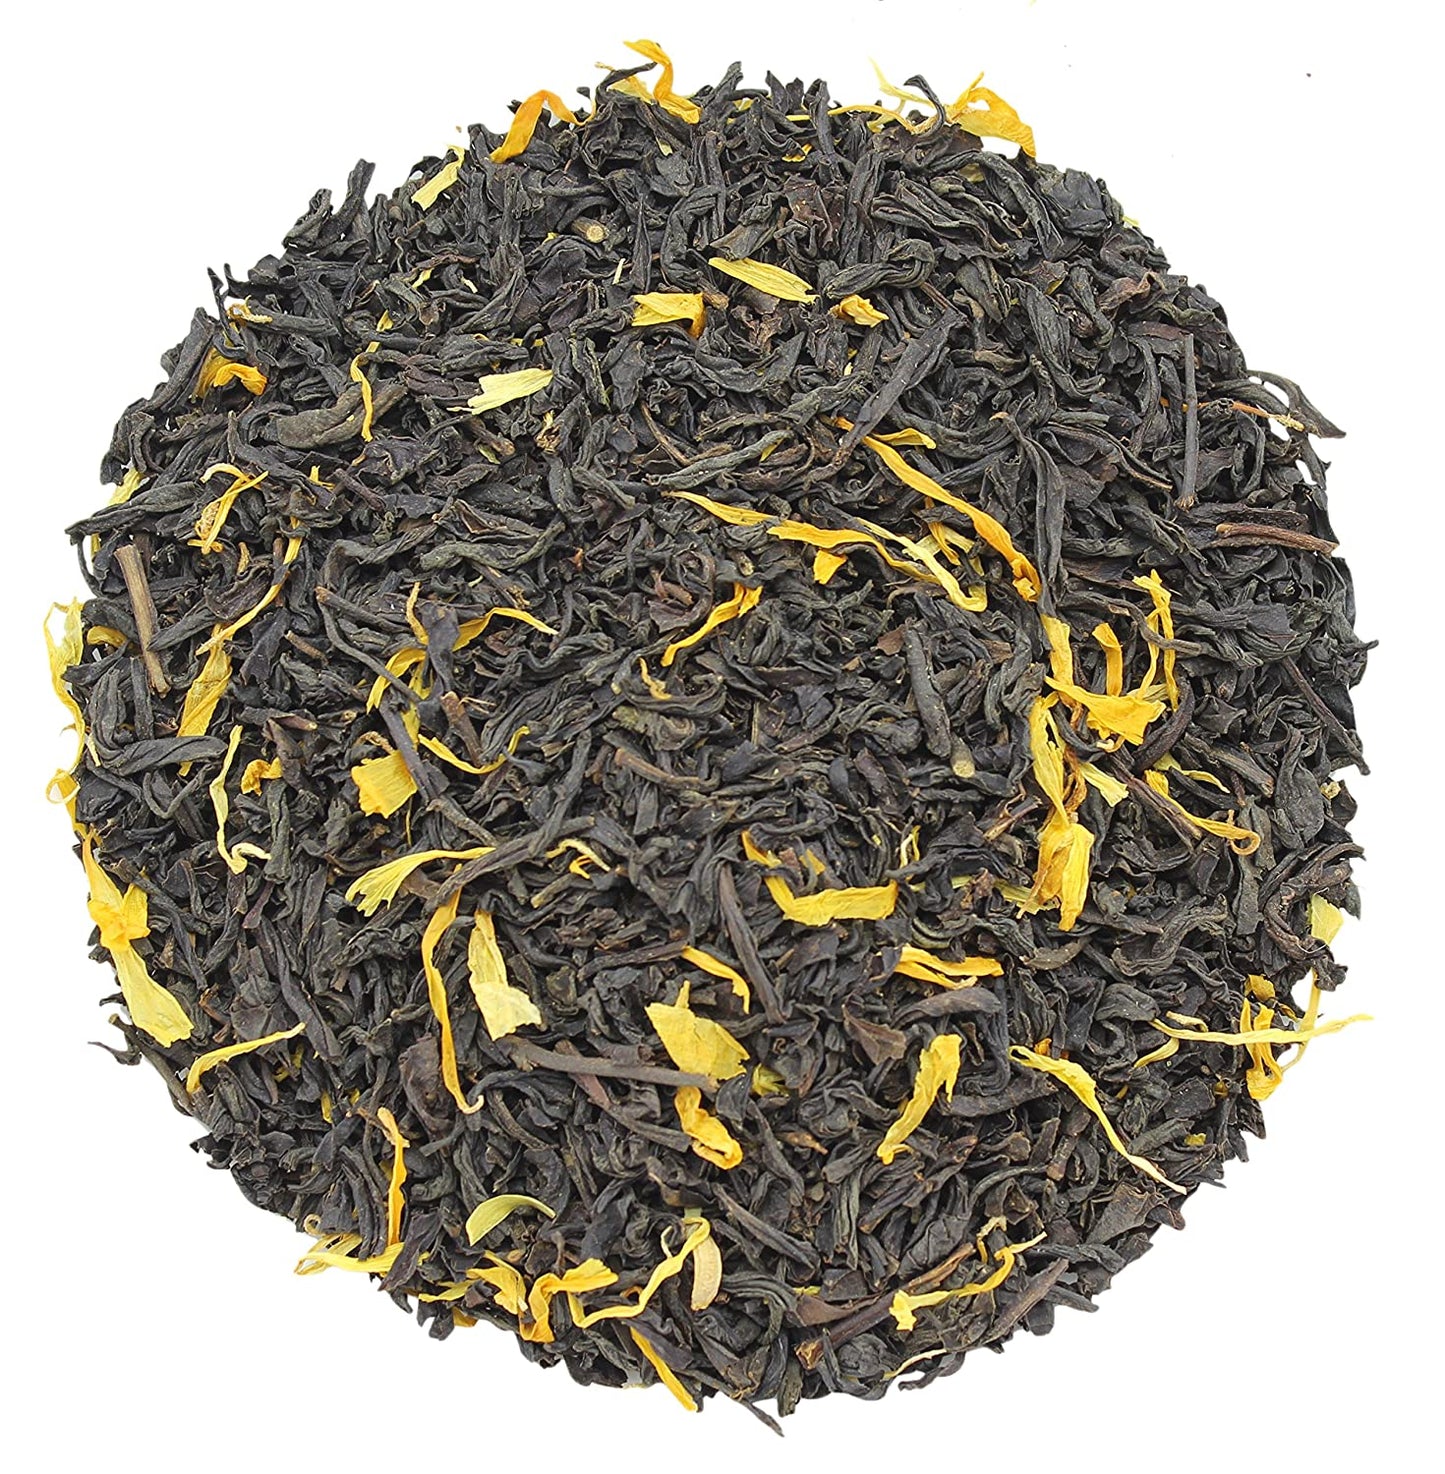 Passionfruit Black Tea